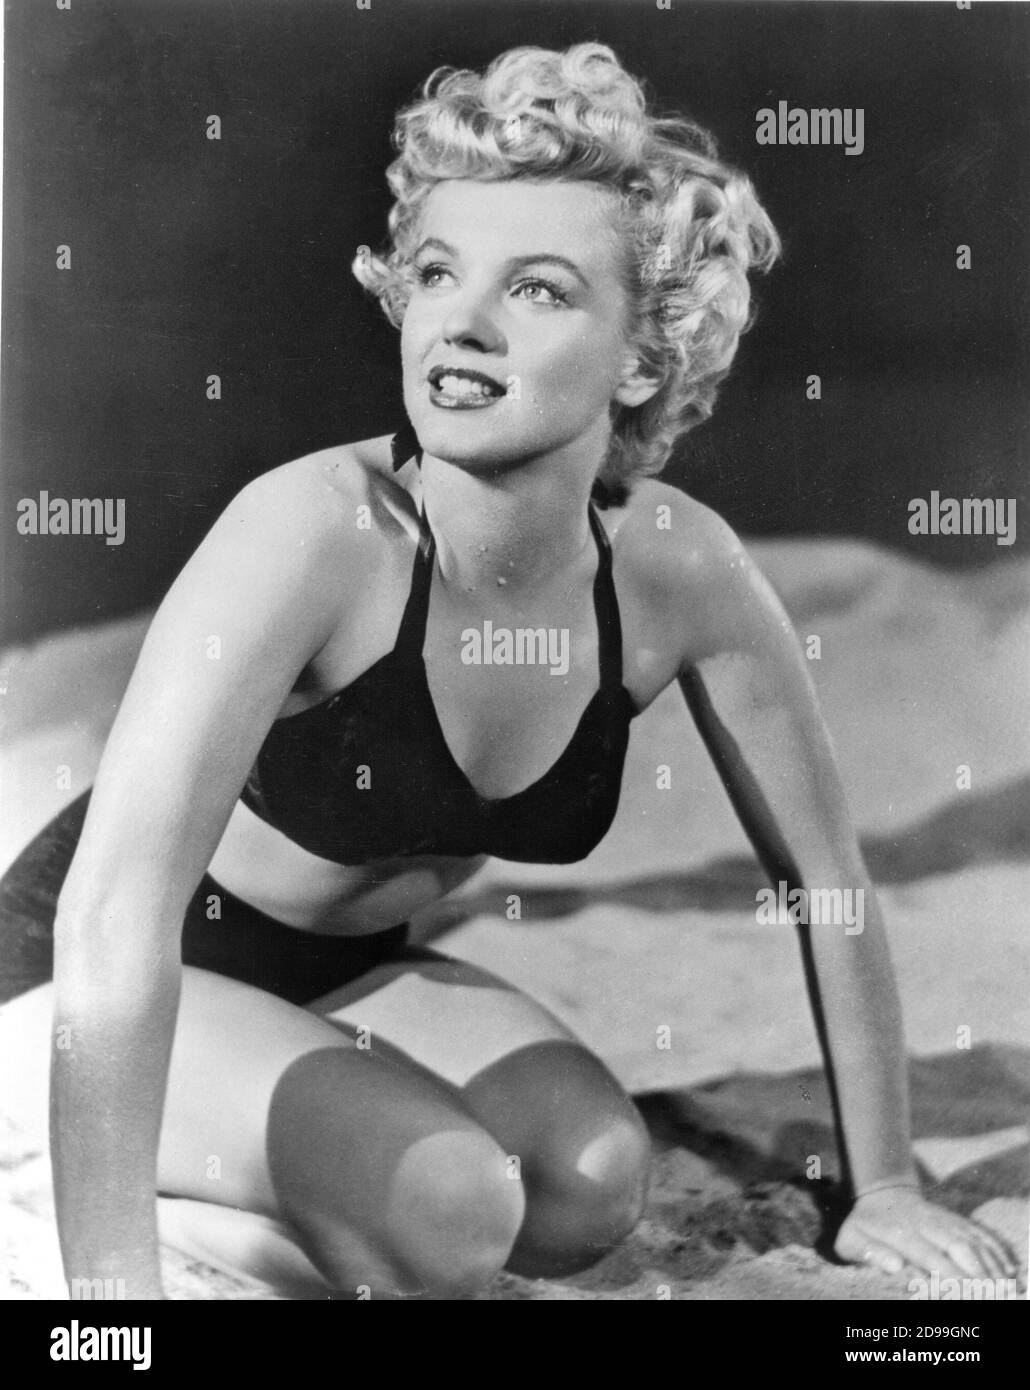 Marilyn monroe bikini hi-res stock photography and images - Alamy